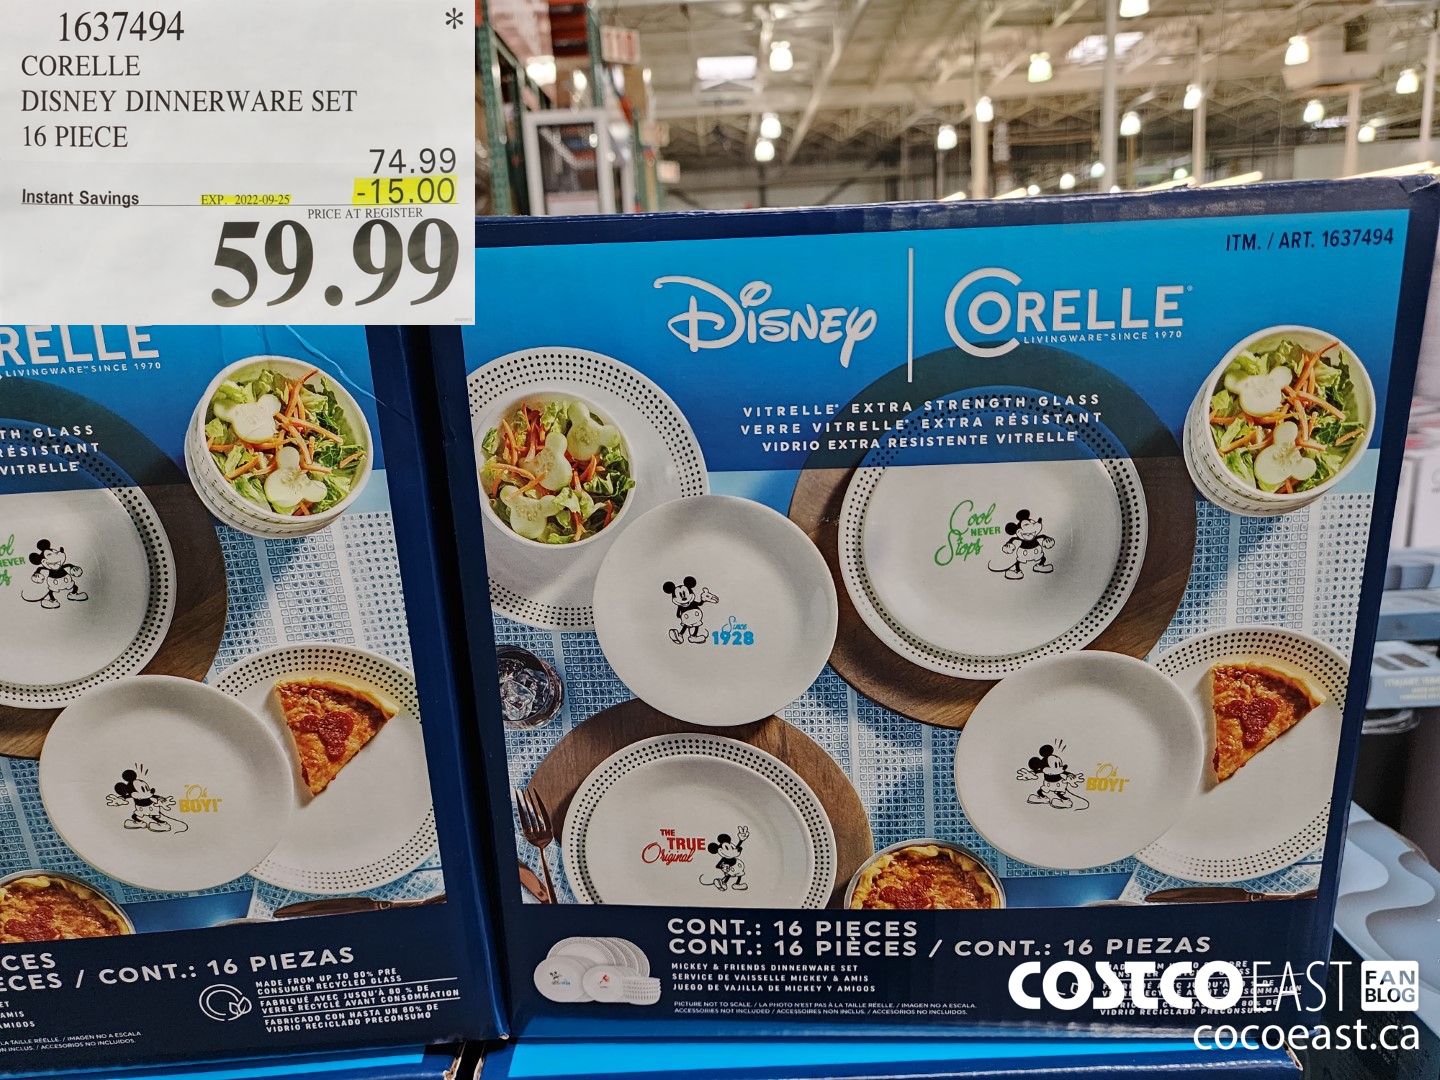 Disney Corelle 16-Piece Dinnerware Set Only $29.97 at Costco